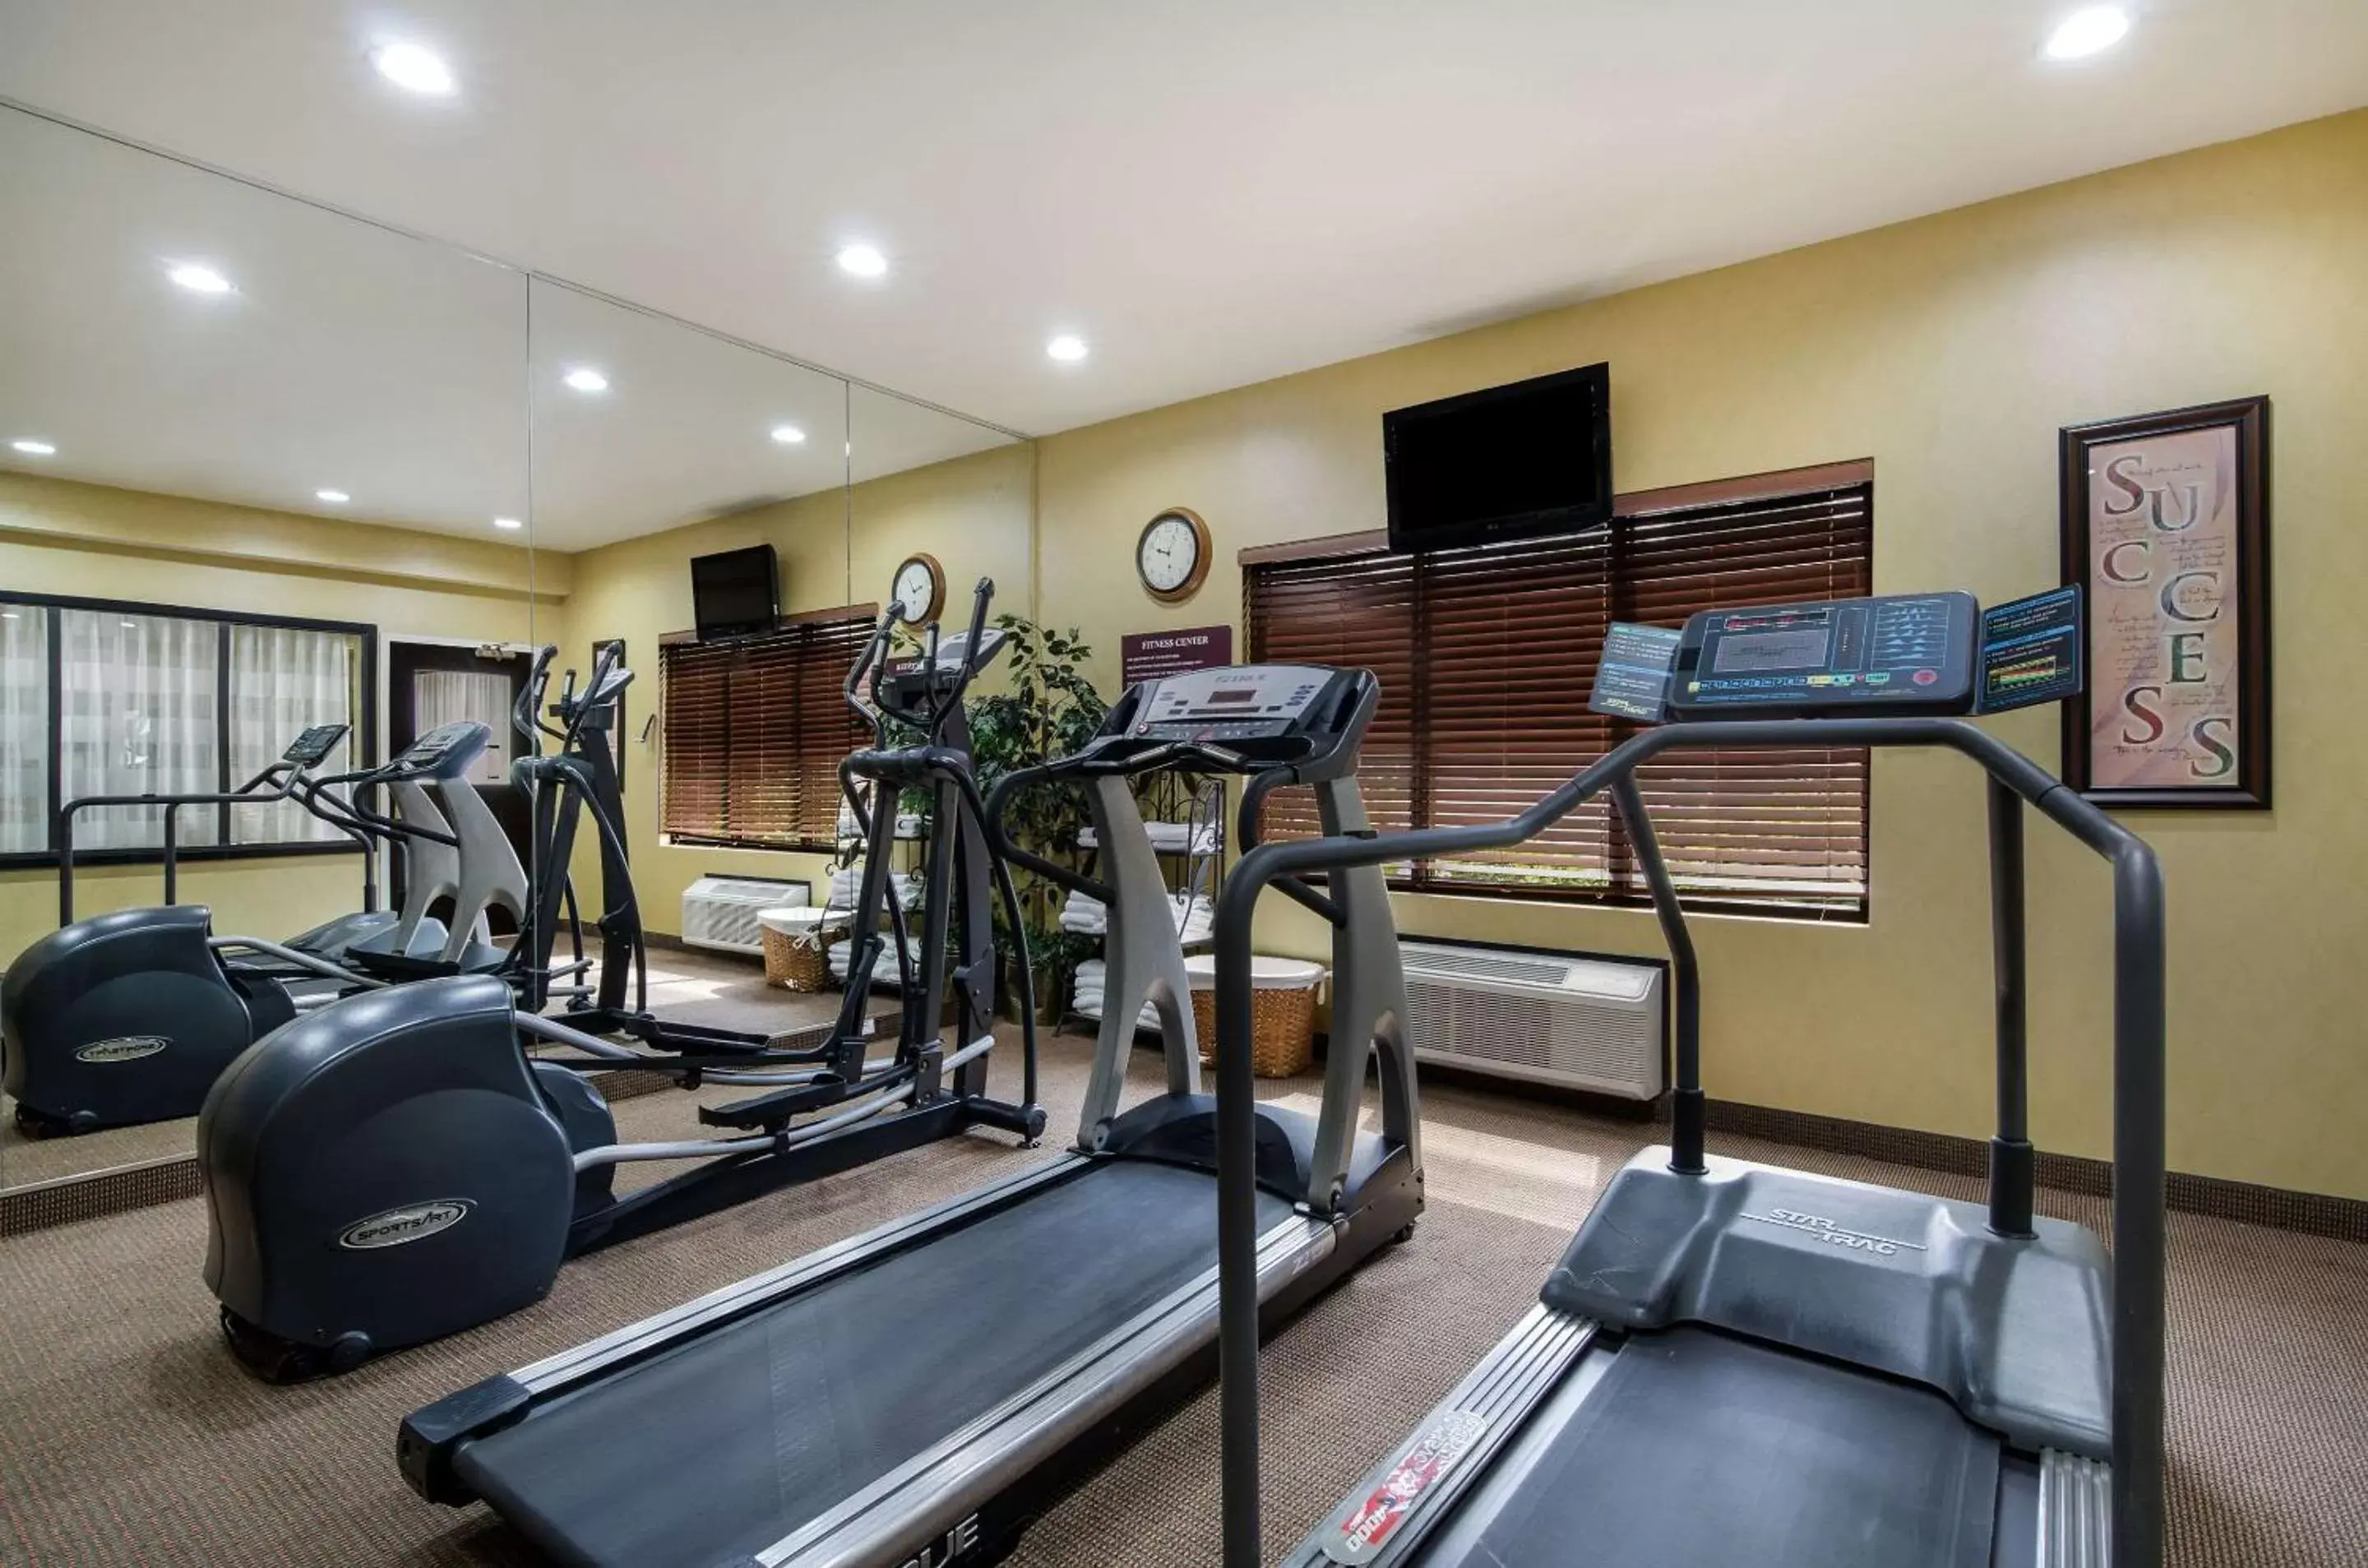 Fitness centre/facilities, Fitness Center/Facilities in Sleep Inn Hanes Mall